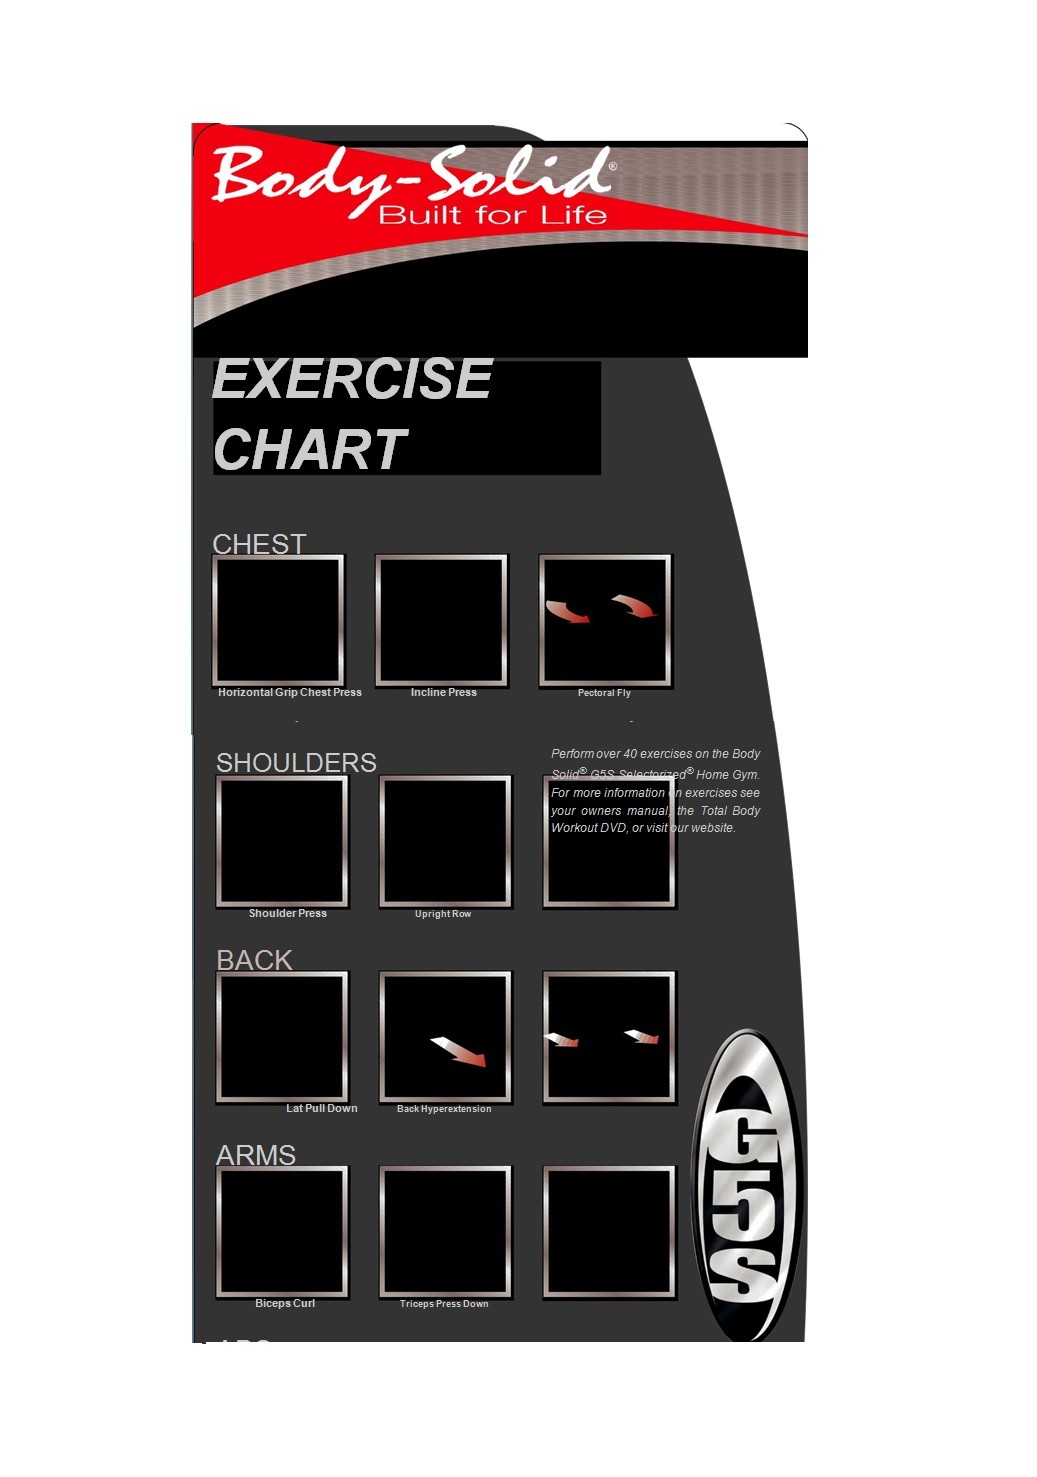 Free exercise chart 37